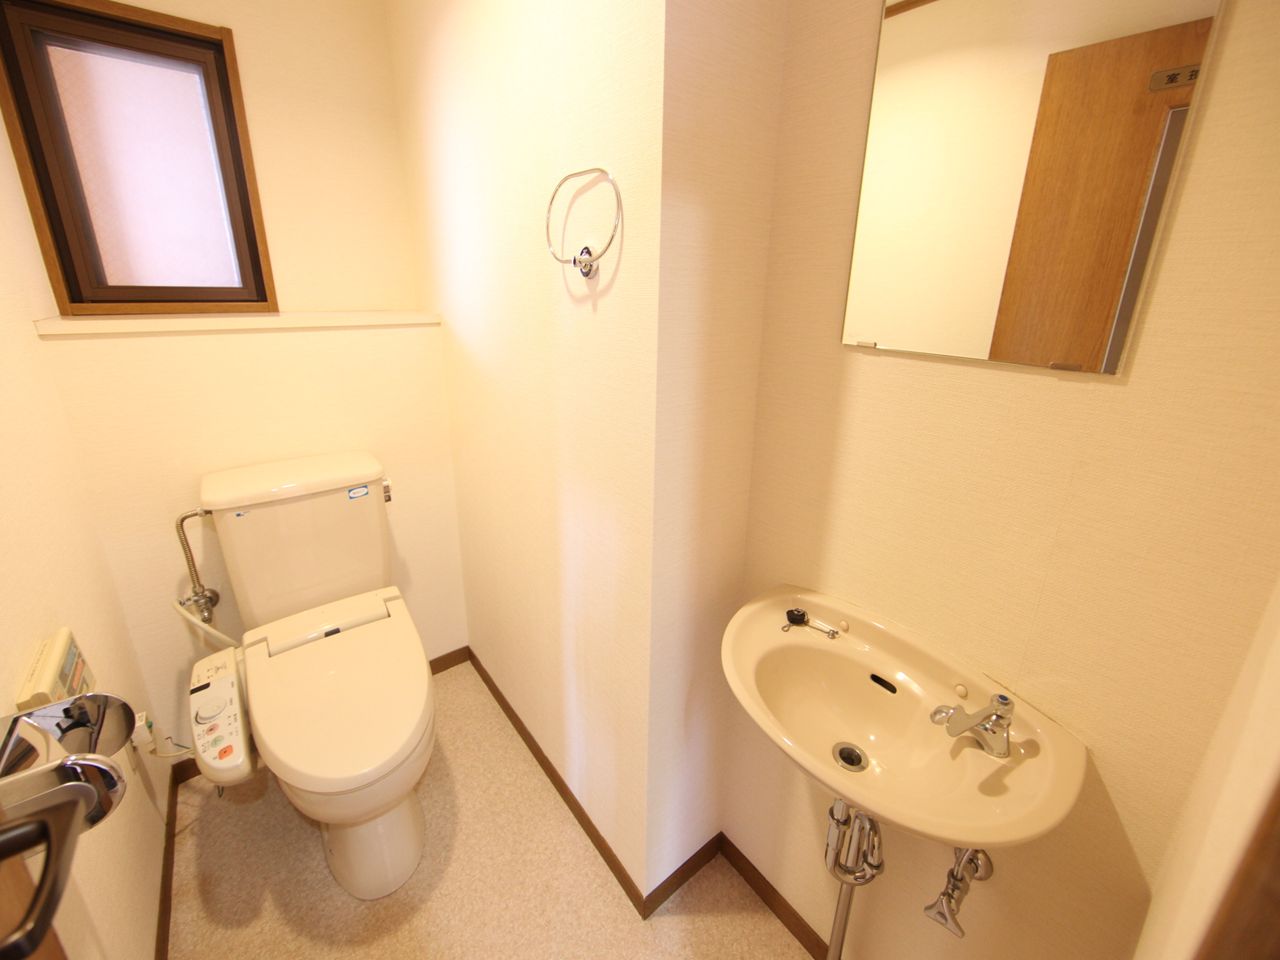 Toilet. Toilet with warm water washing toilet seat Washbasin With windows (ventilation good)